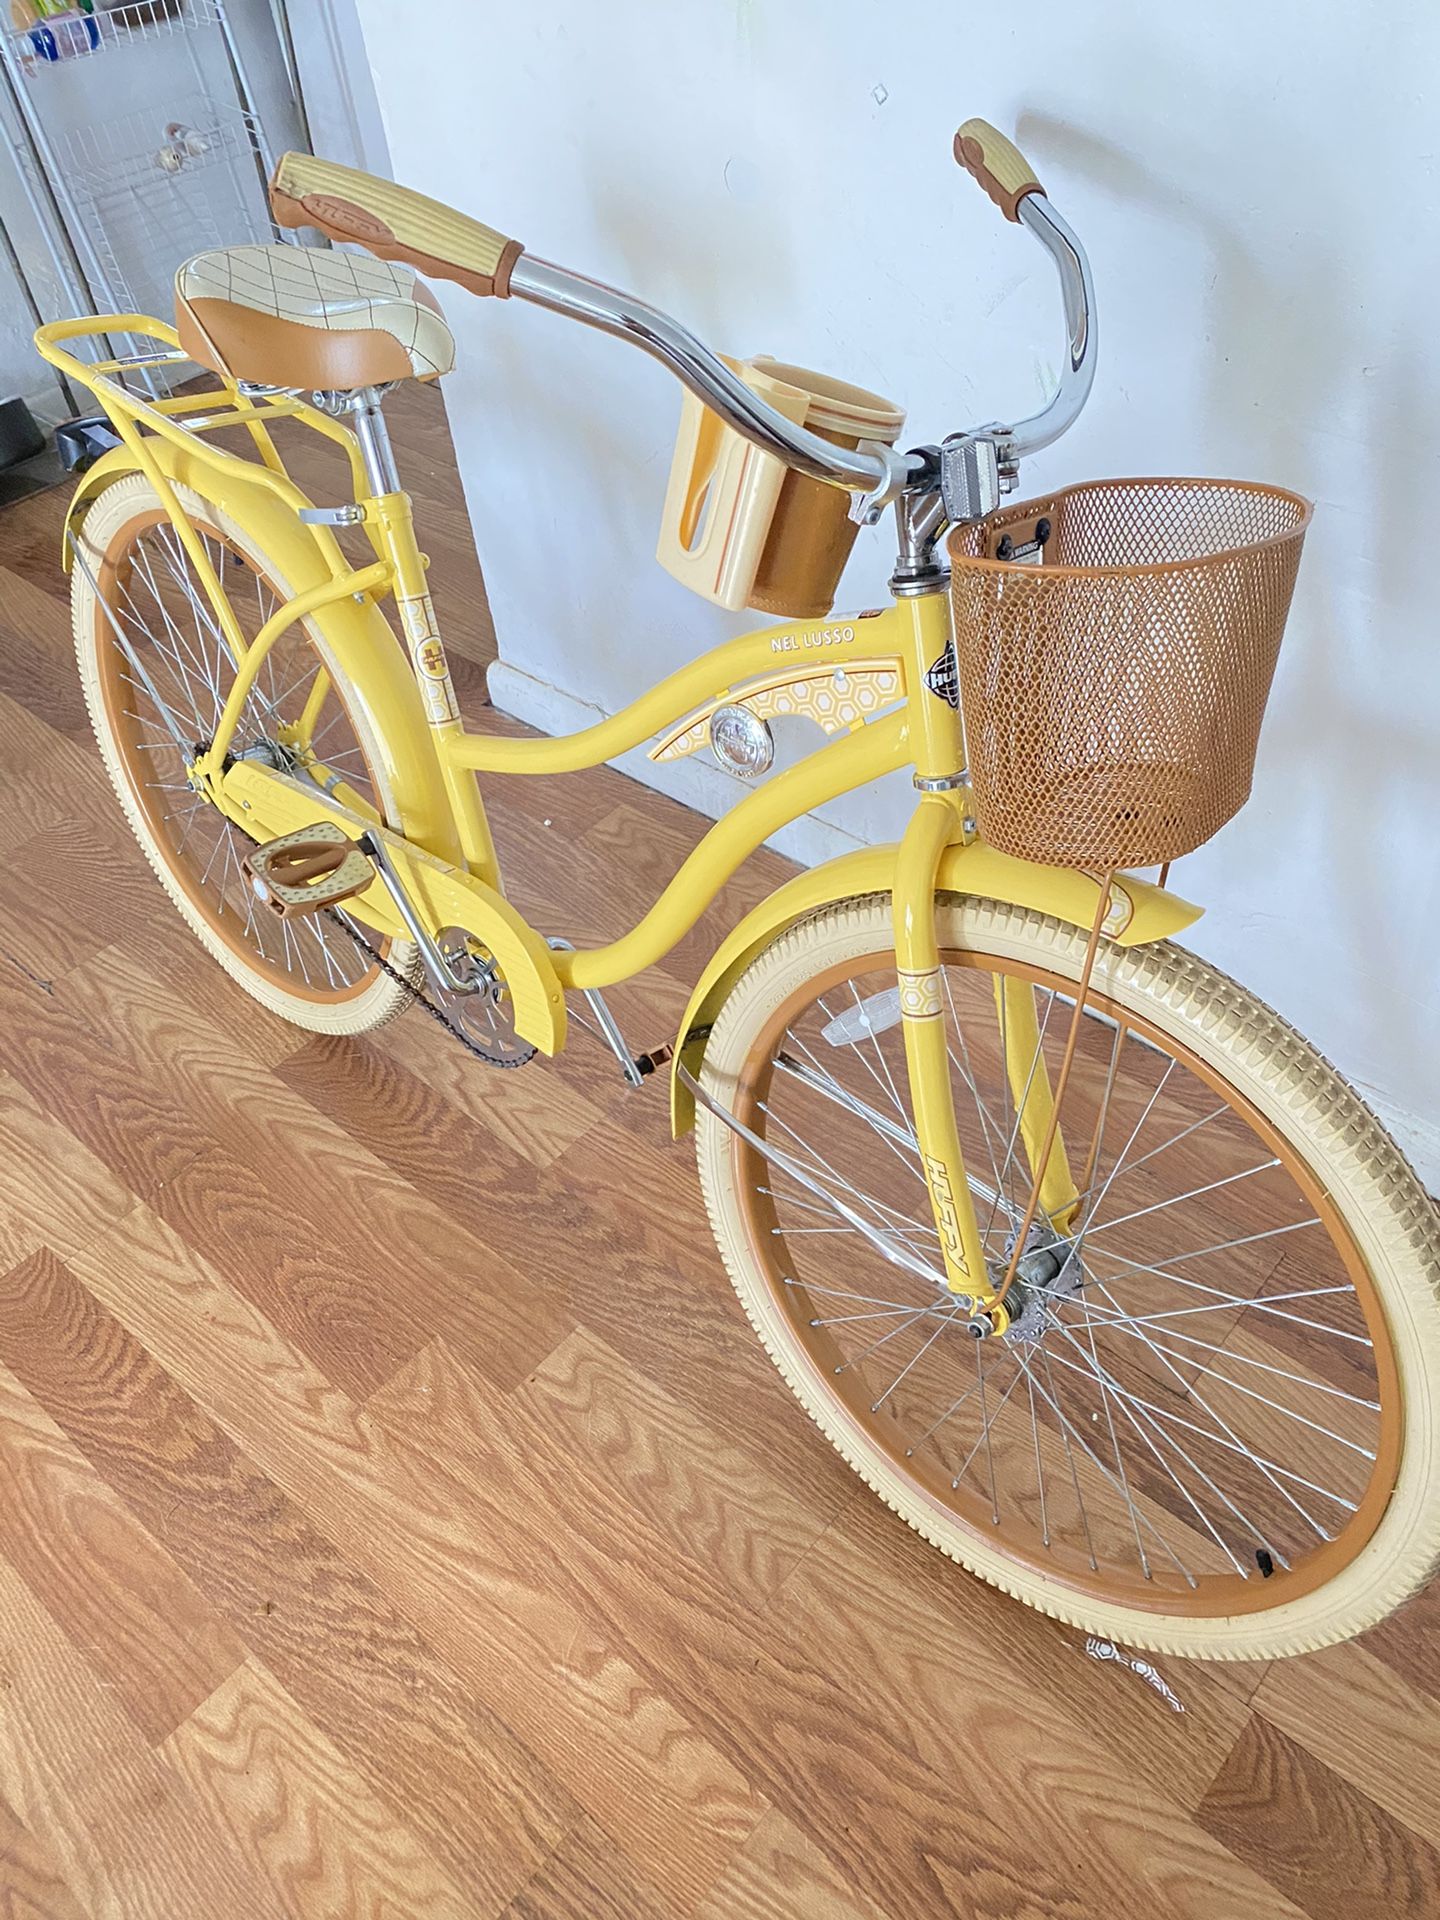 Huffy “26” inch Beach Cruiser Bike (Yellow) excellent condition